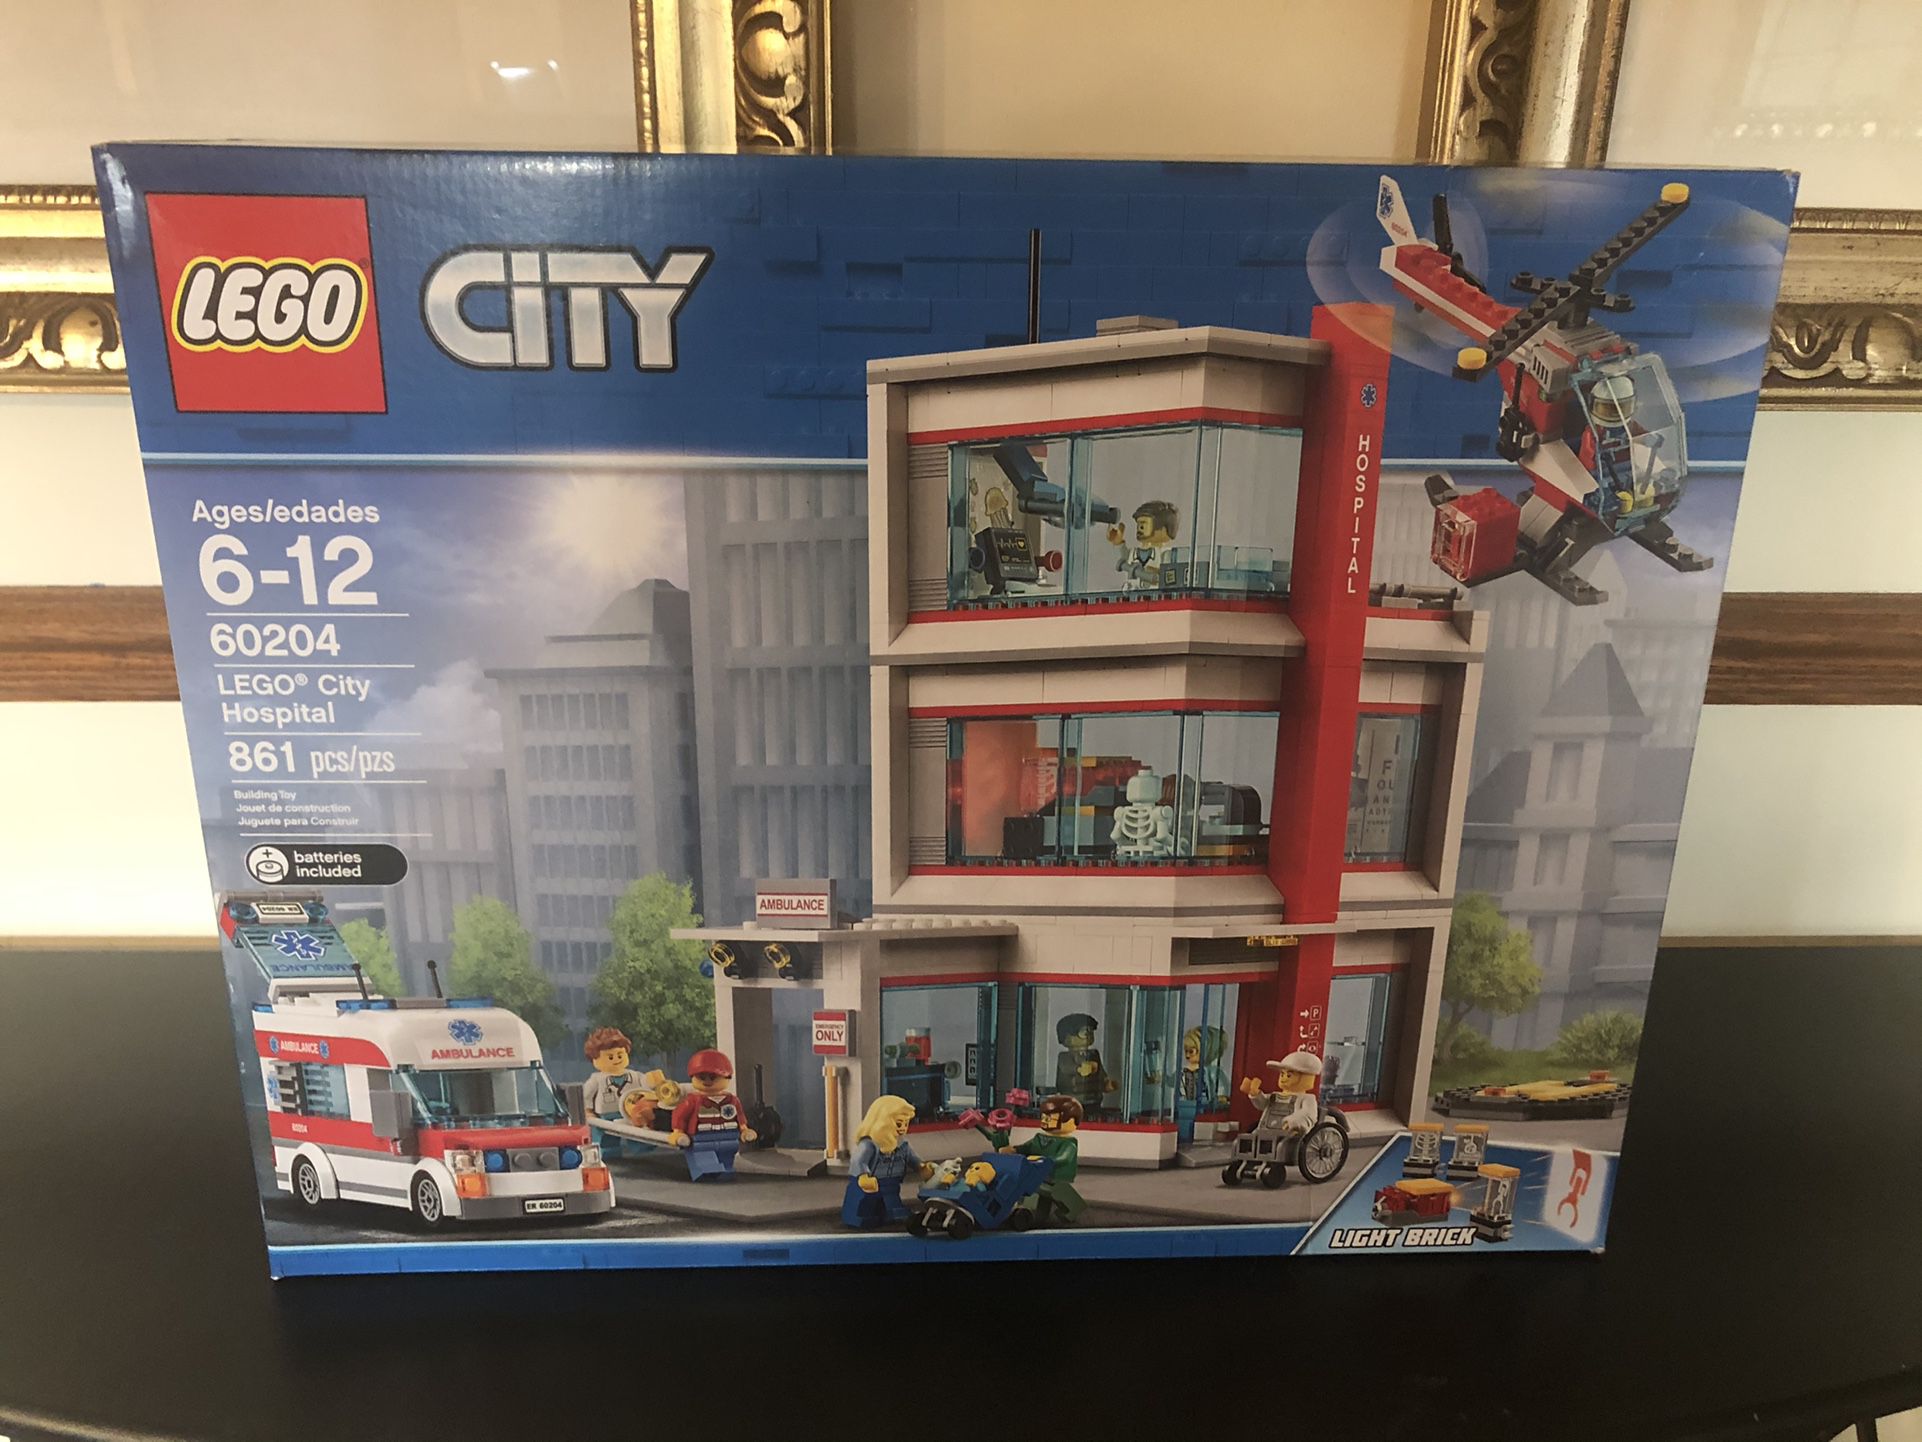 New Lego City Hospital